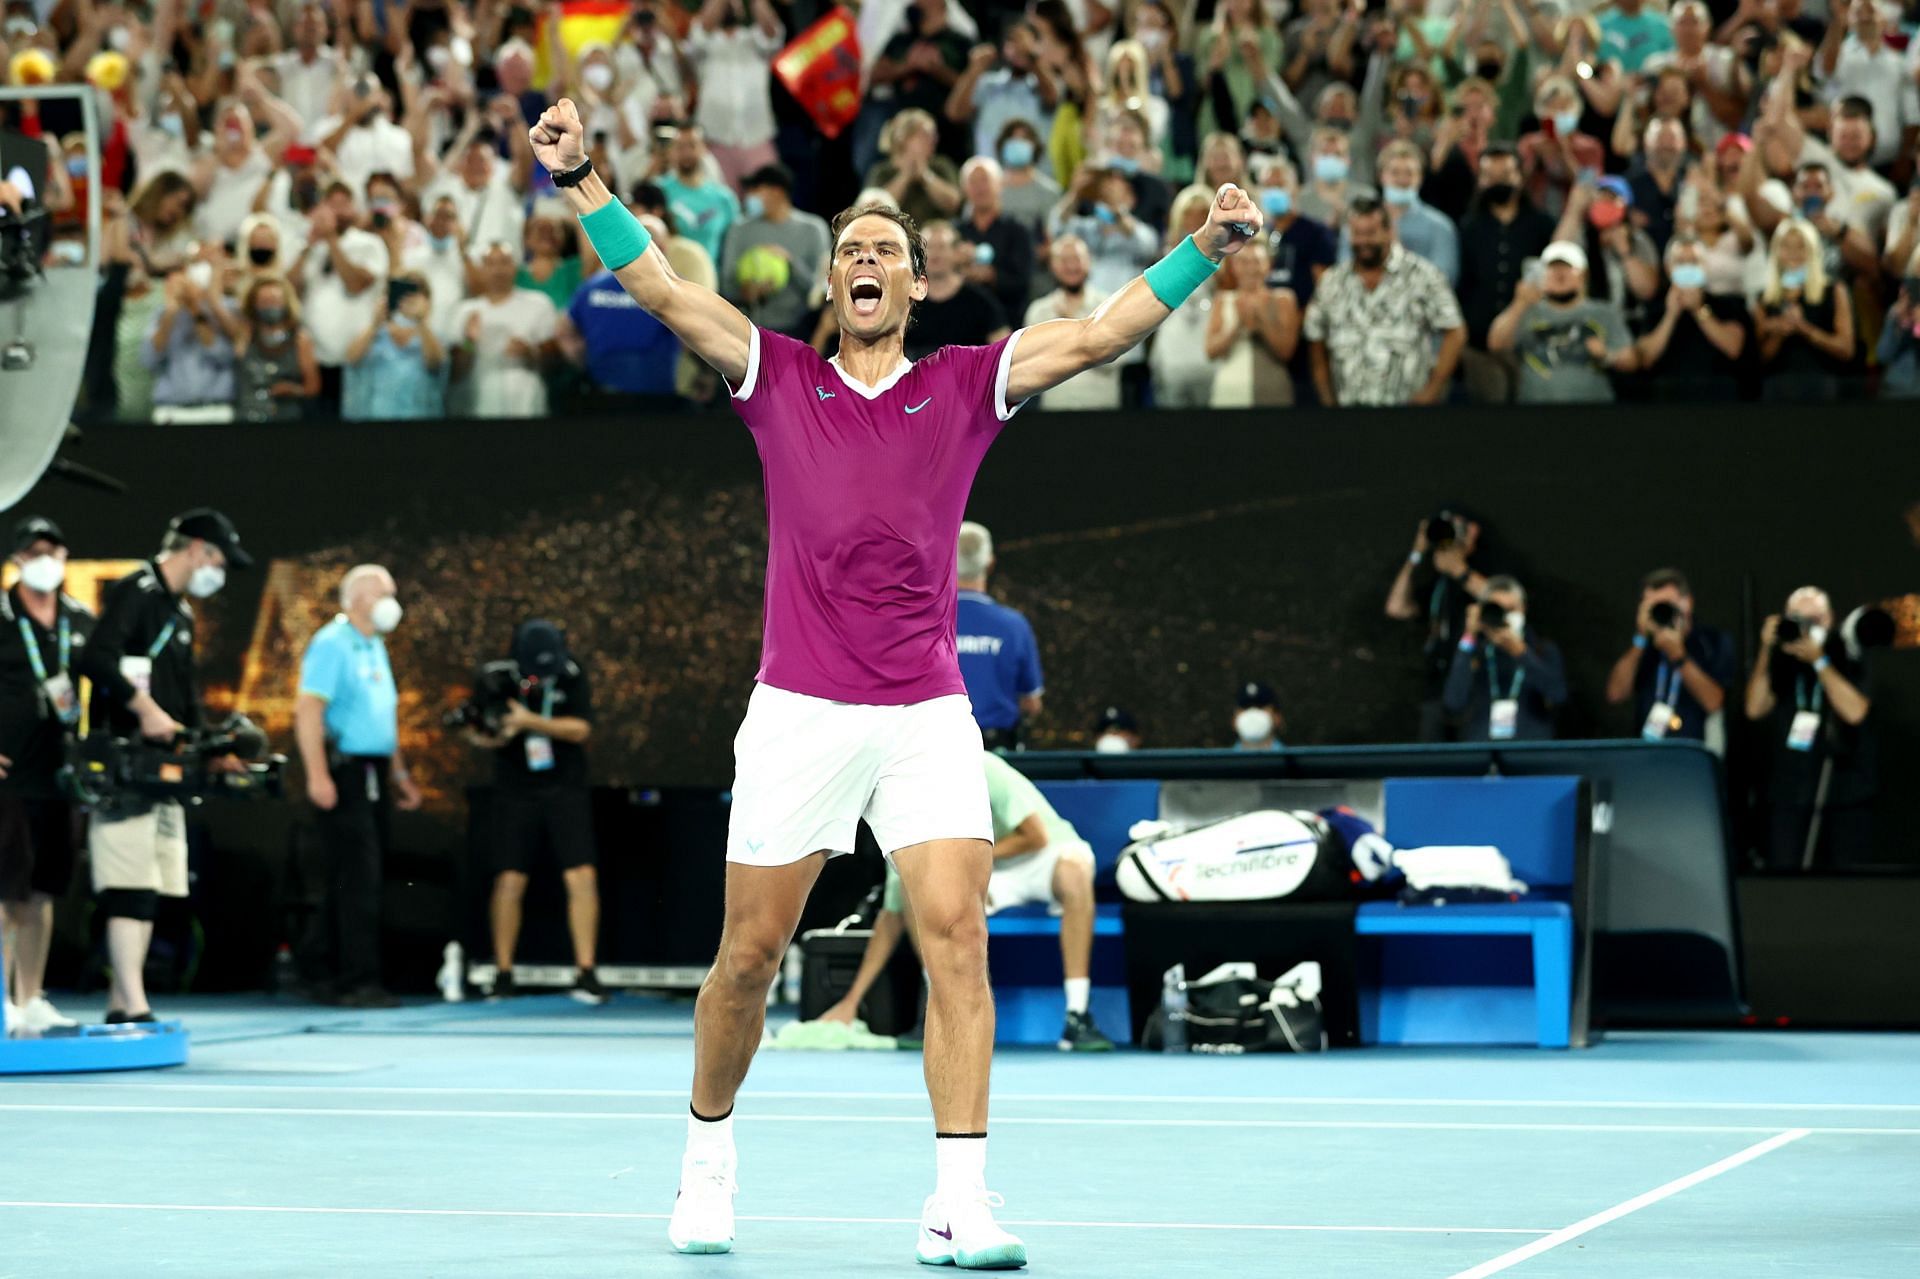 Rafael Nadal at the Australian Open 2022